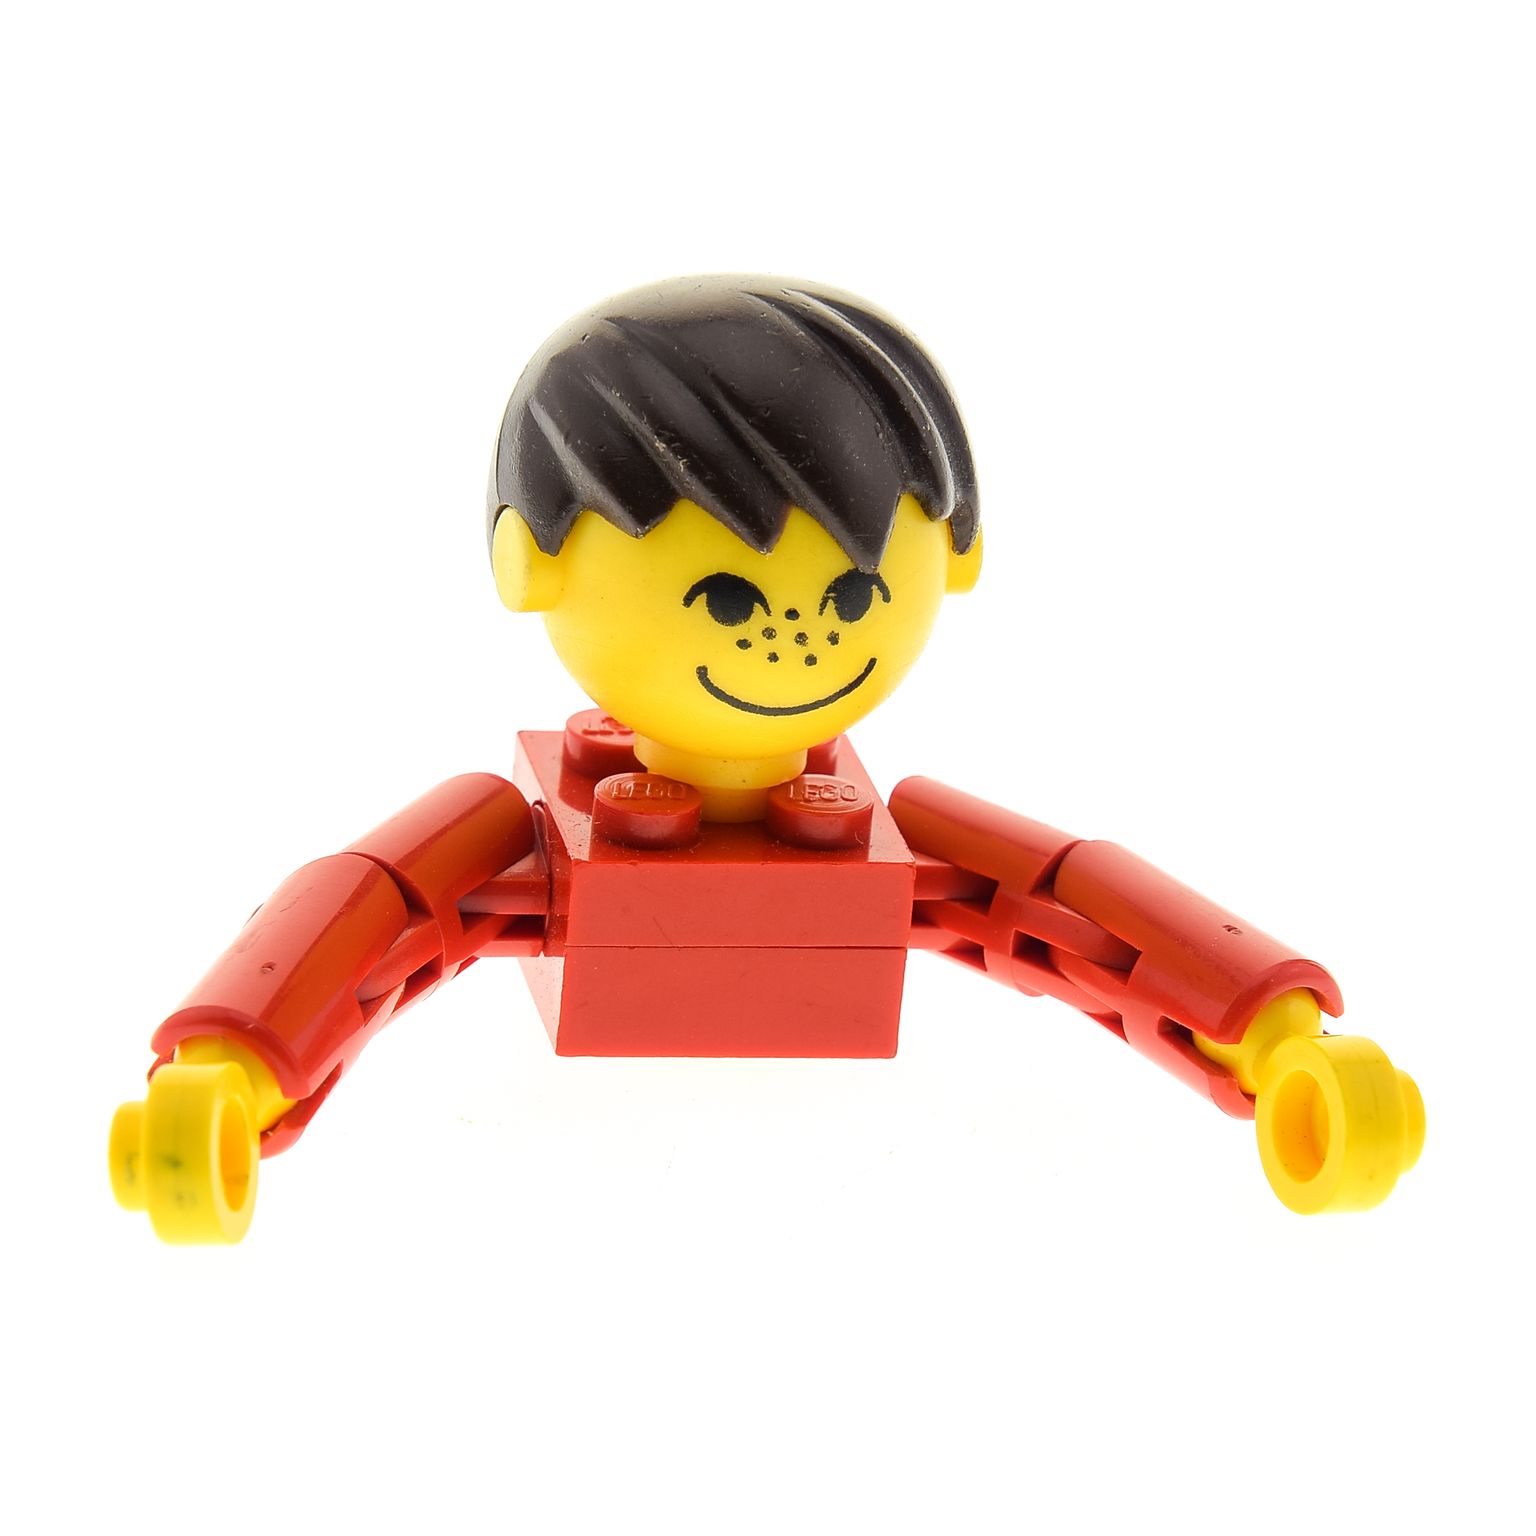 1x Lego Homemaker Großkopf Figur Mann Junge schwarz rot Sommersprossen 685px3c01 